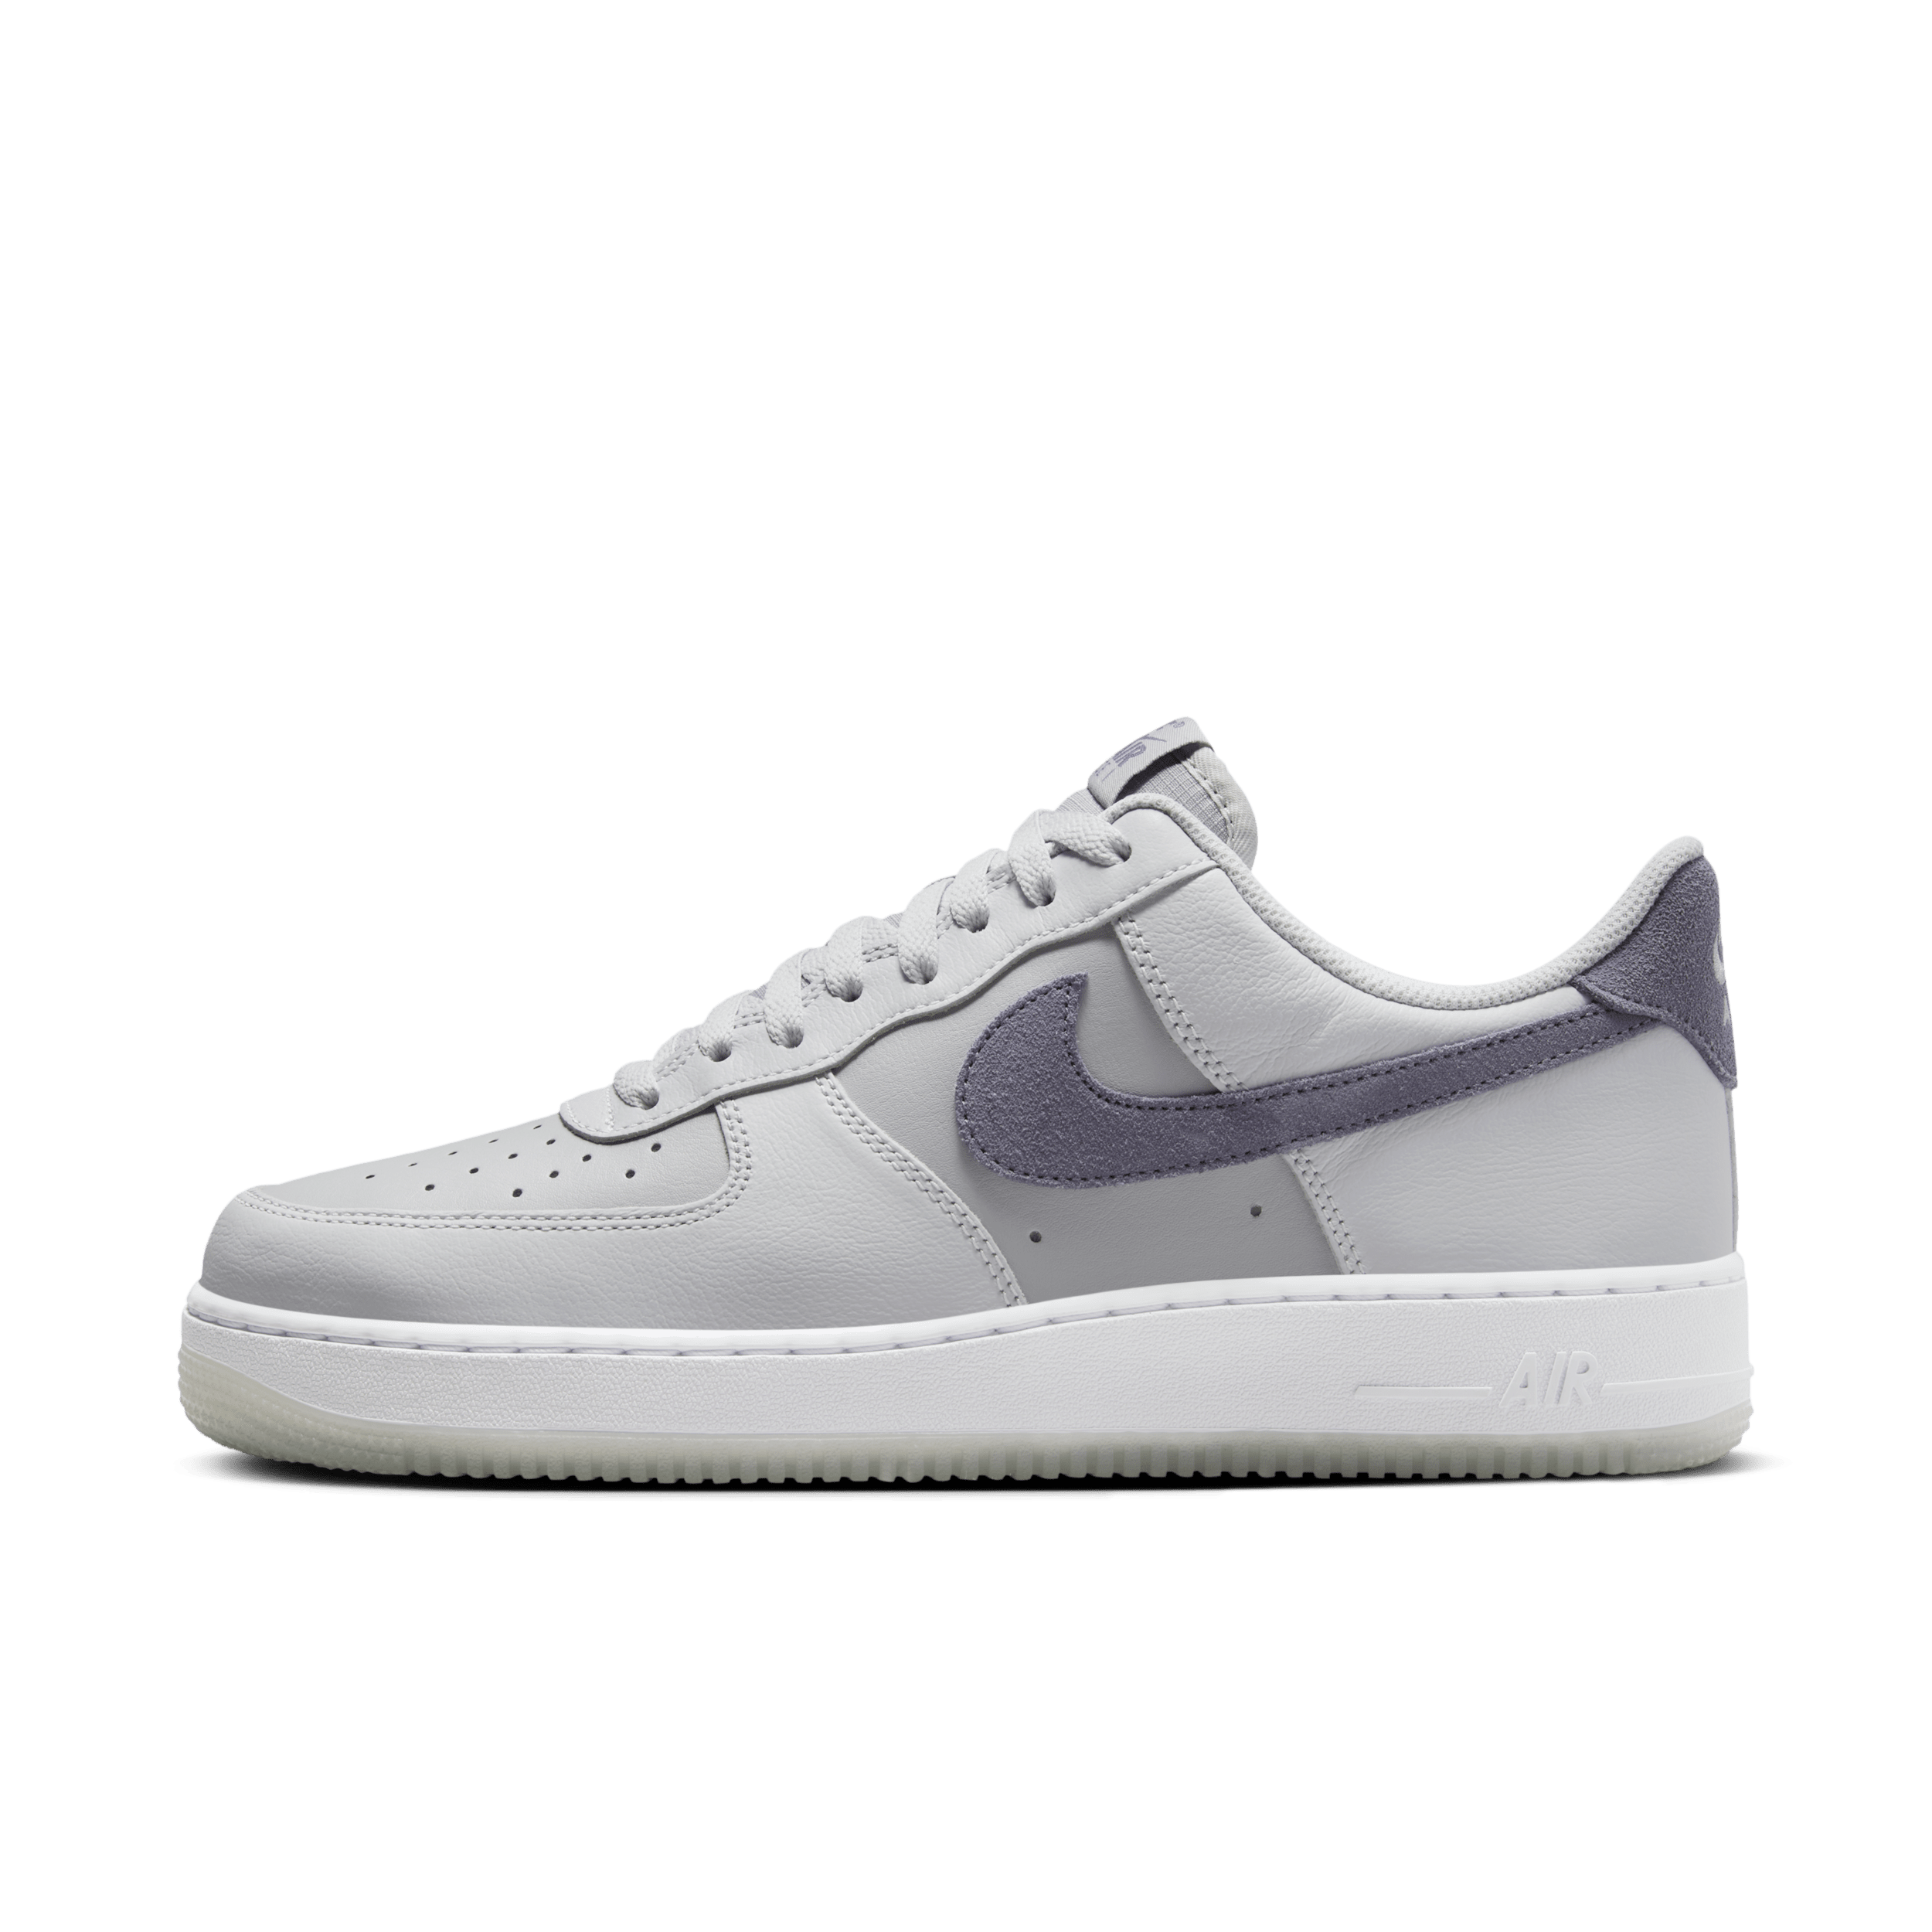 Nike Air Force 1 '07 LV8-sko til mænd - grå